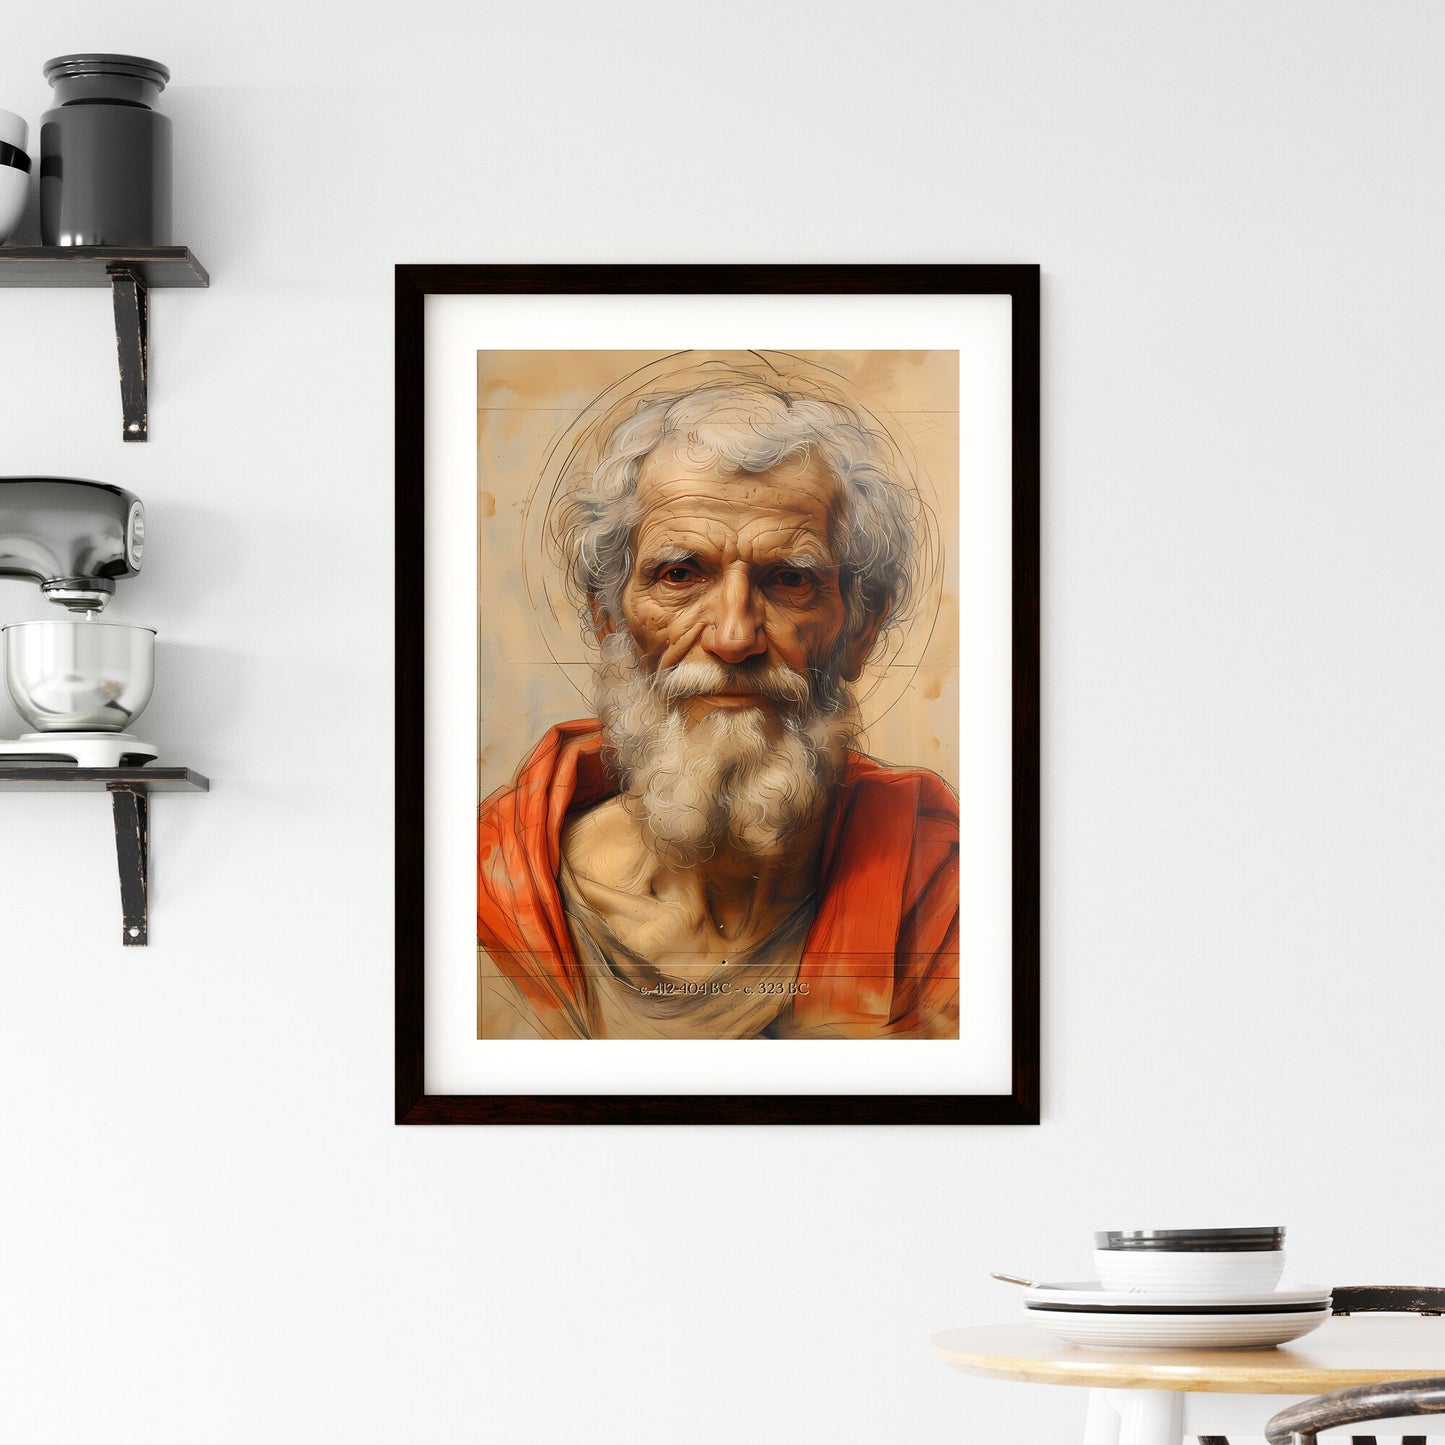 c. 412-404 BC - c. 323 BC, A Poster of a painting of a man with a beard Default Title